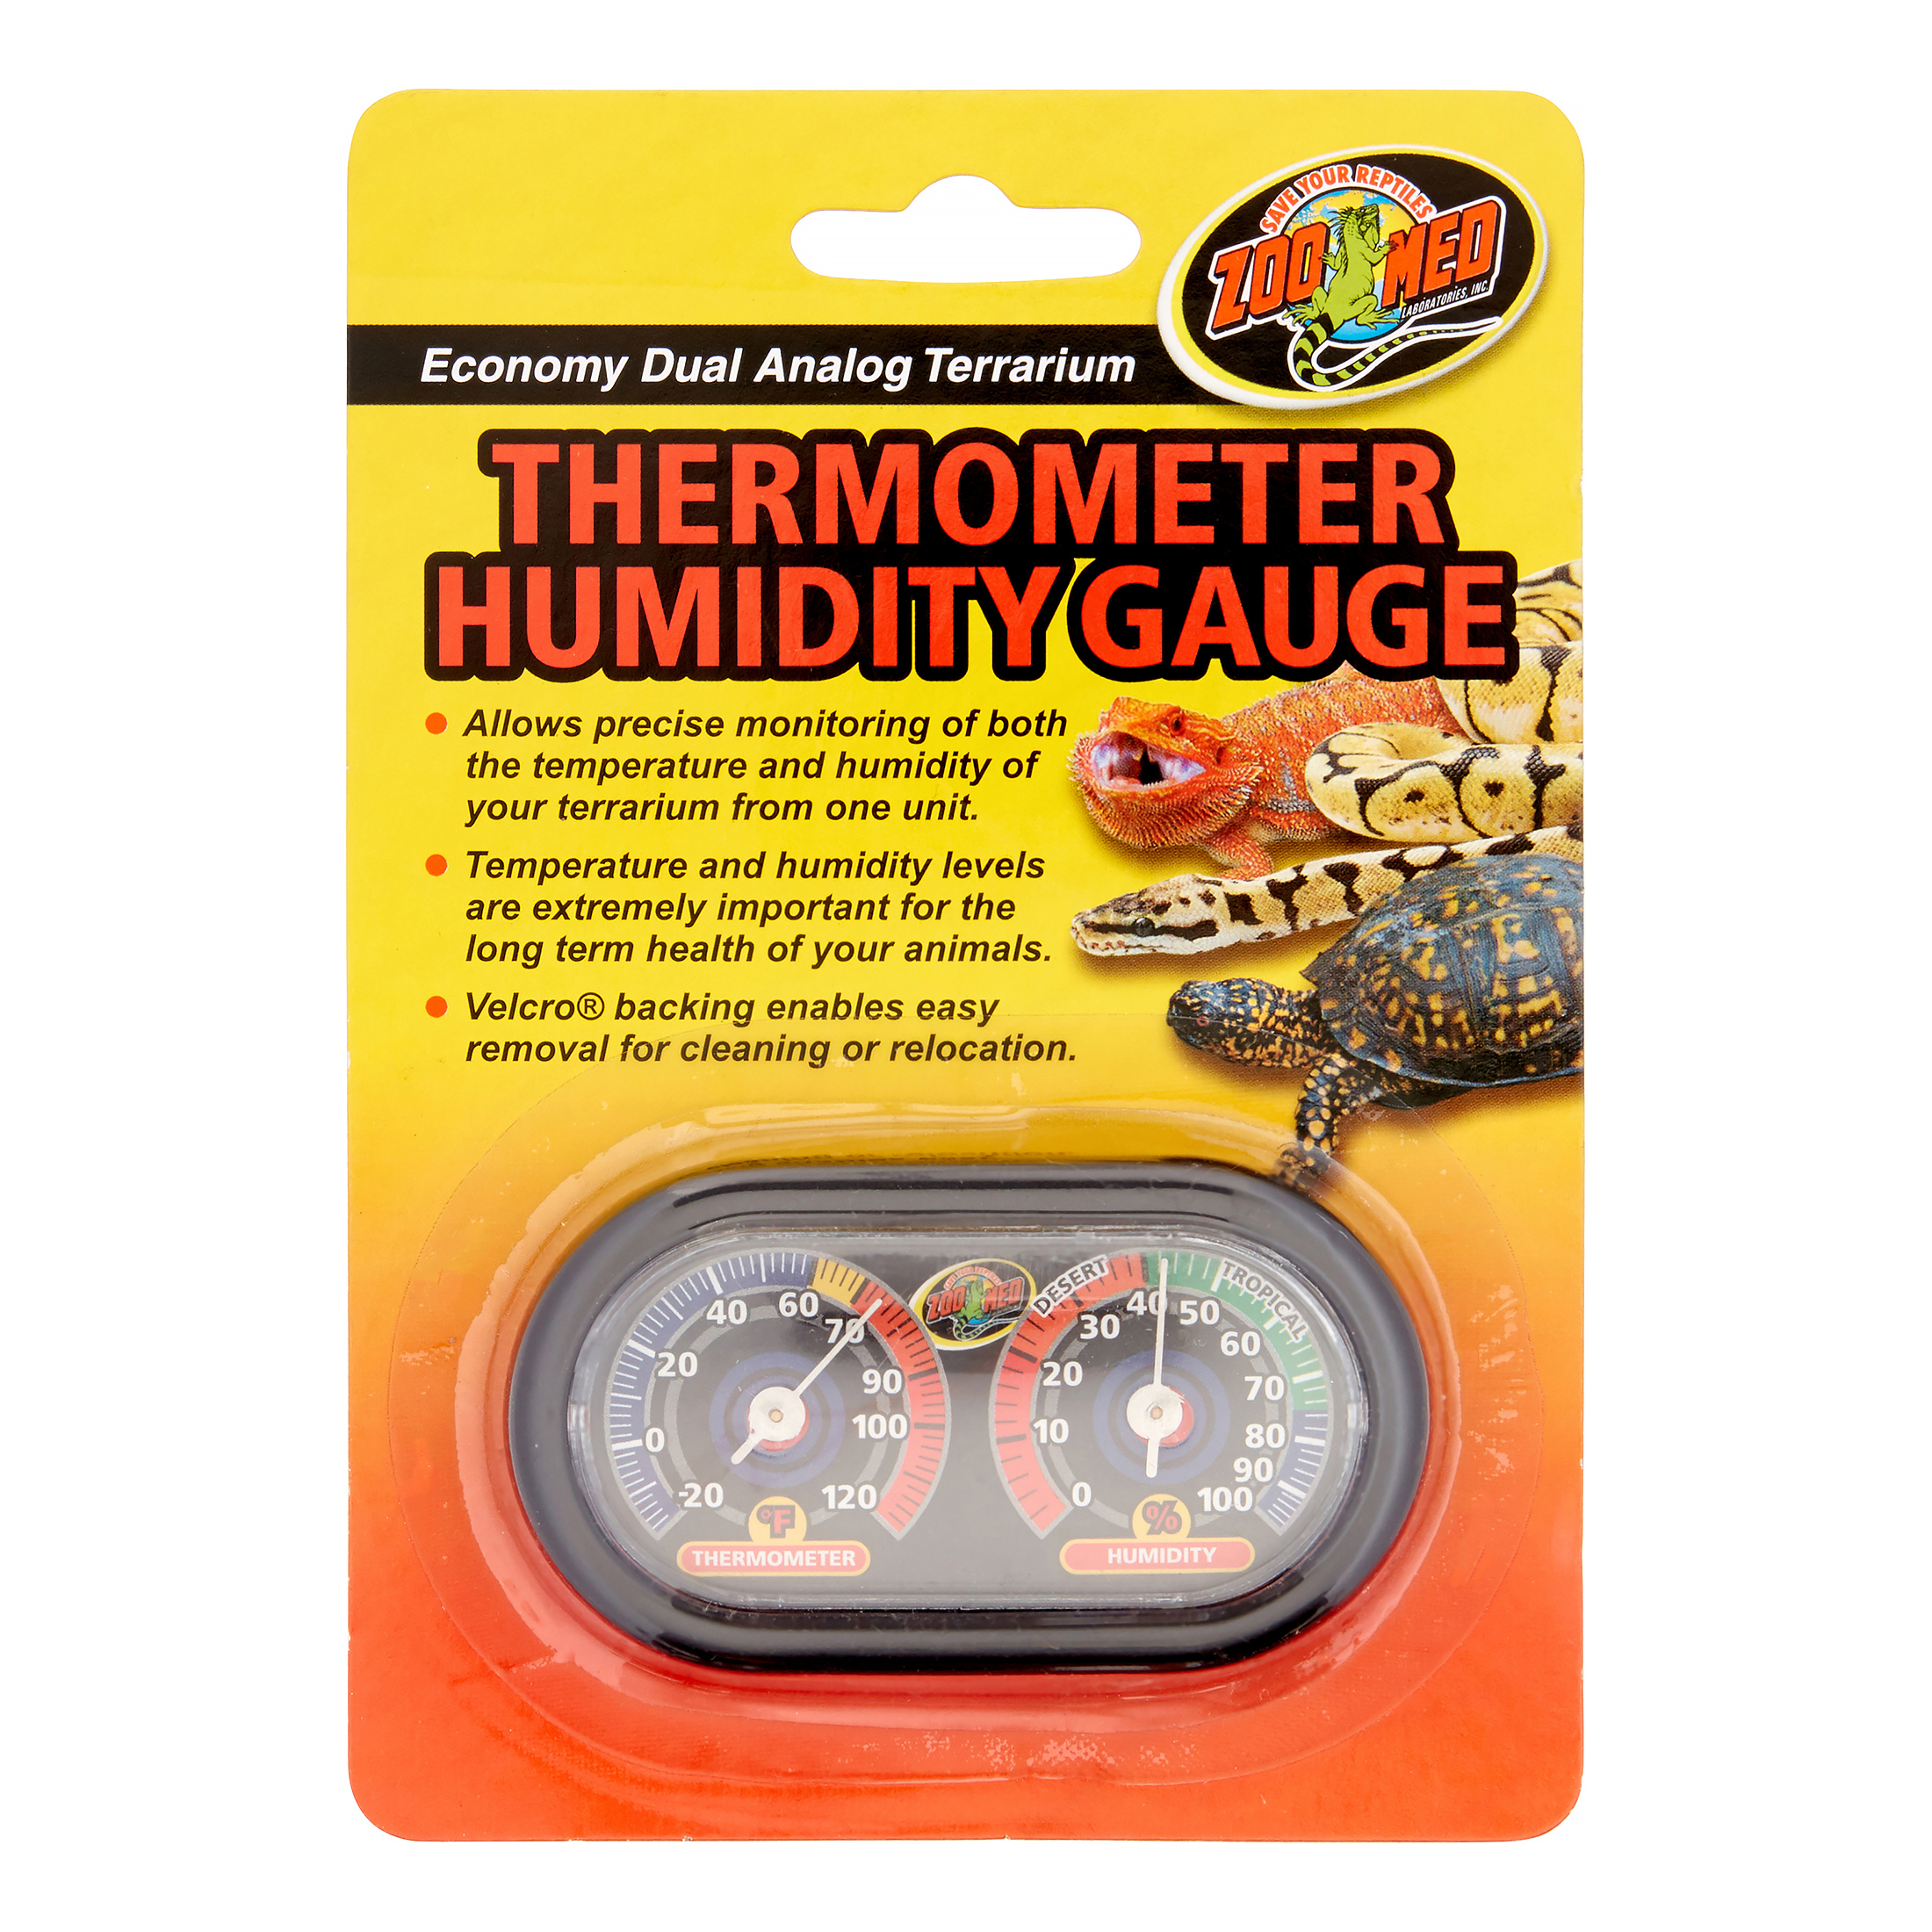 Zoo Med Economy Dual Analog Terrarium Thermometer Humidity Gauge - image 1 of 2